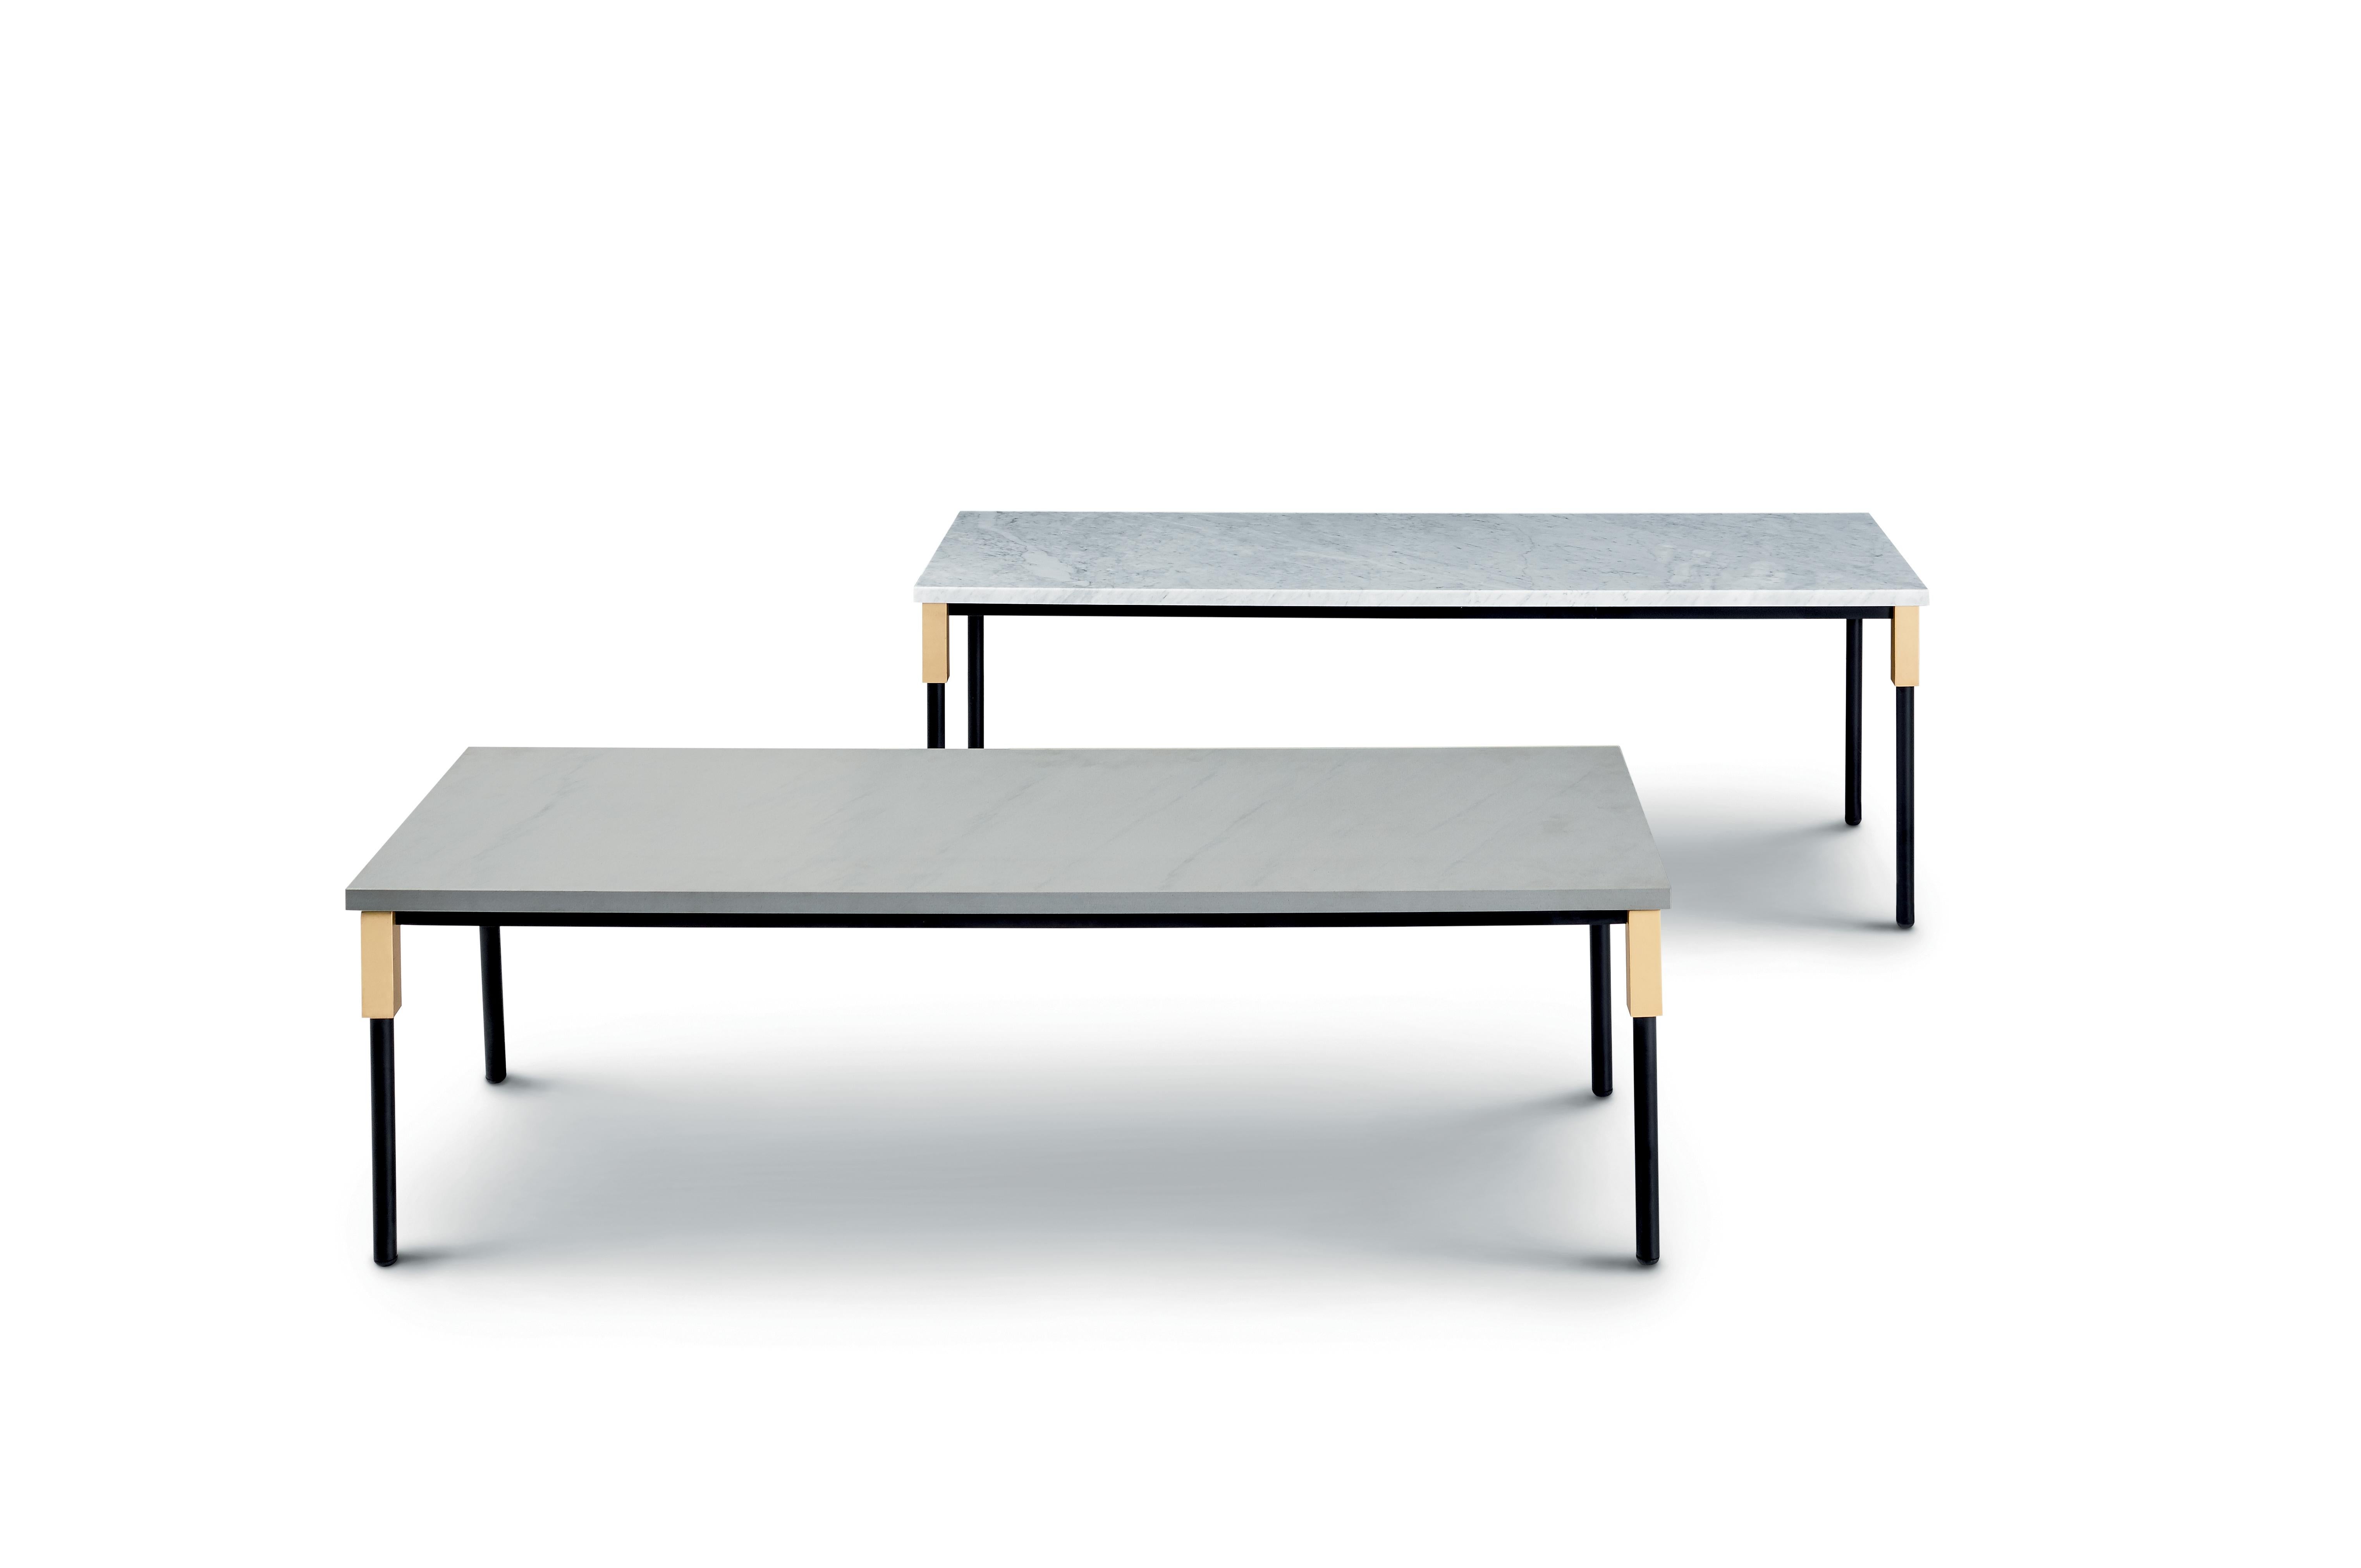 Arflex Match Small Table in Quarzite Silver Marble by Bernhardt & Vella For Sale 1